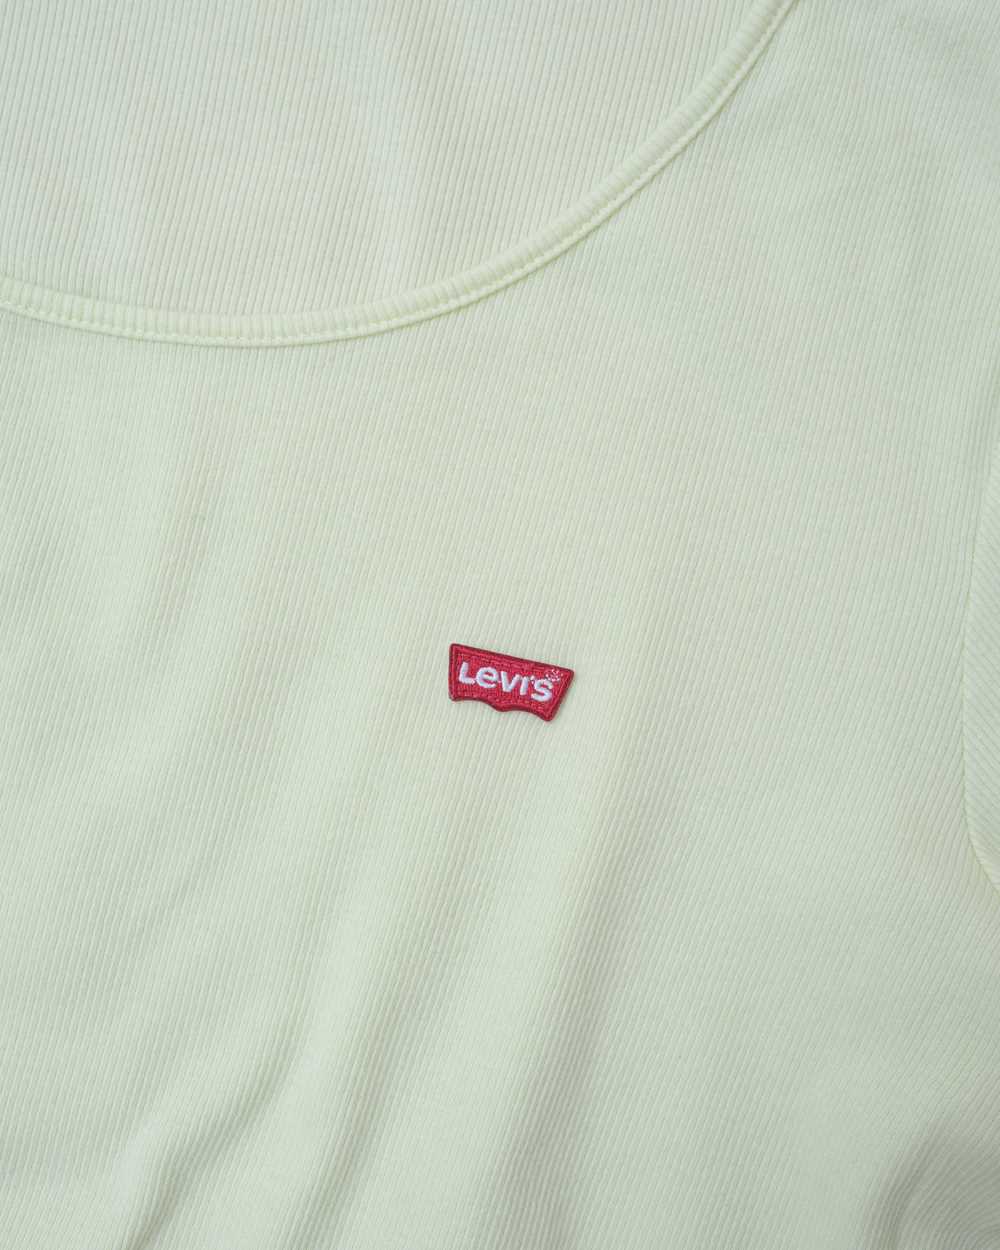 Vintage Ribbed LEVI'S Shirt (M/L) - image 6